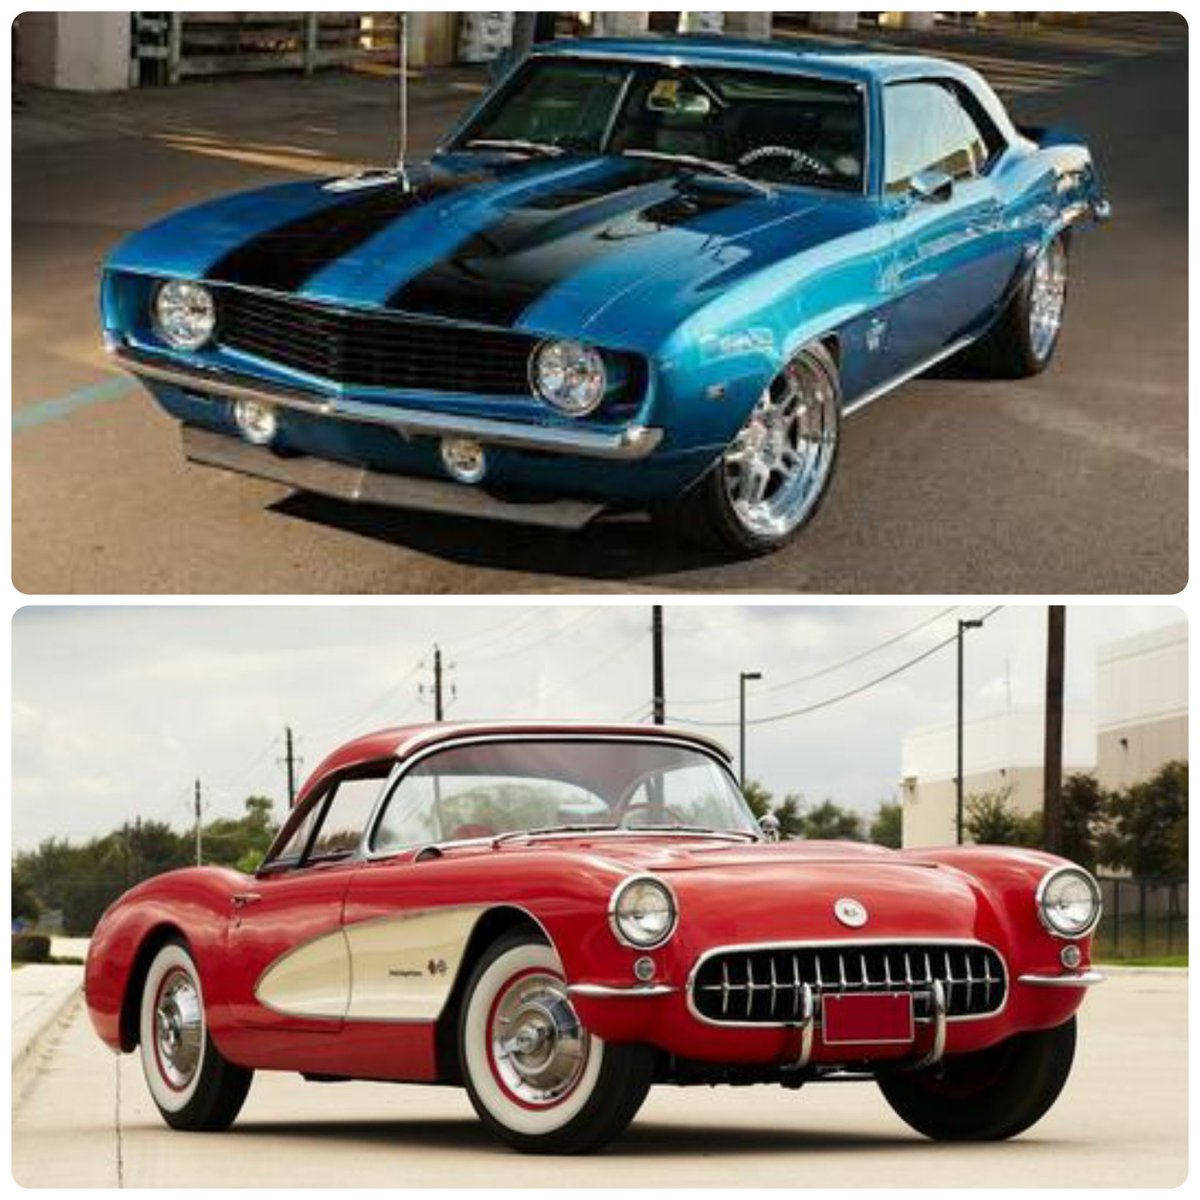 Camaro or Corvette?? #Chevy #Chevrolet #Camaro #Corvette #v8 #OldSchool #AmericanMuscle #ClassicCars